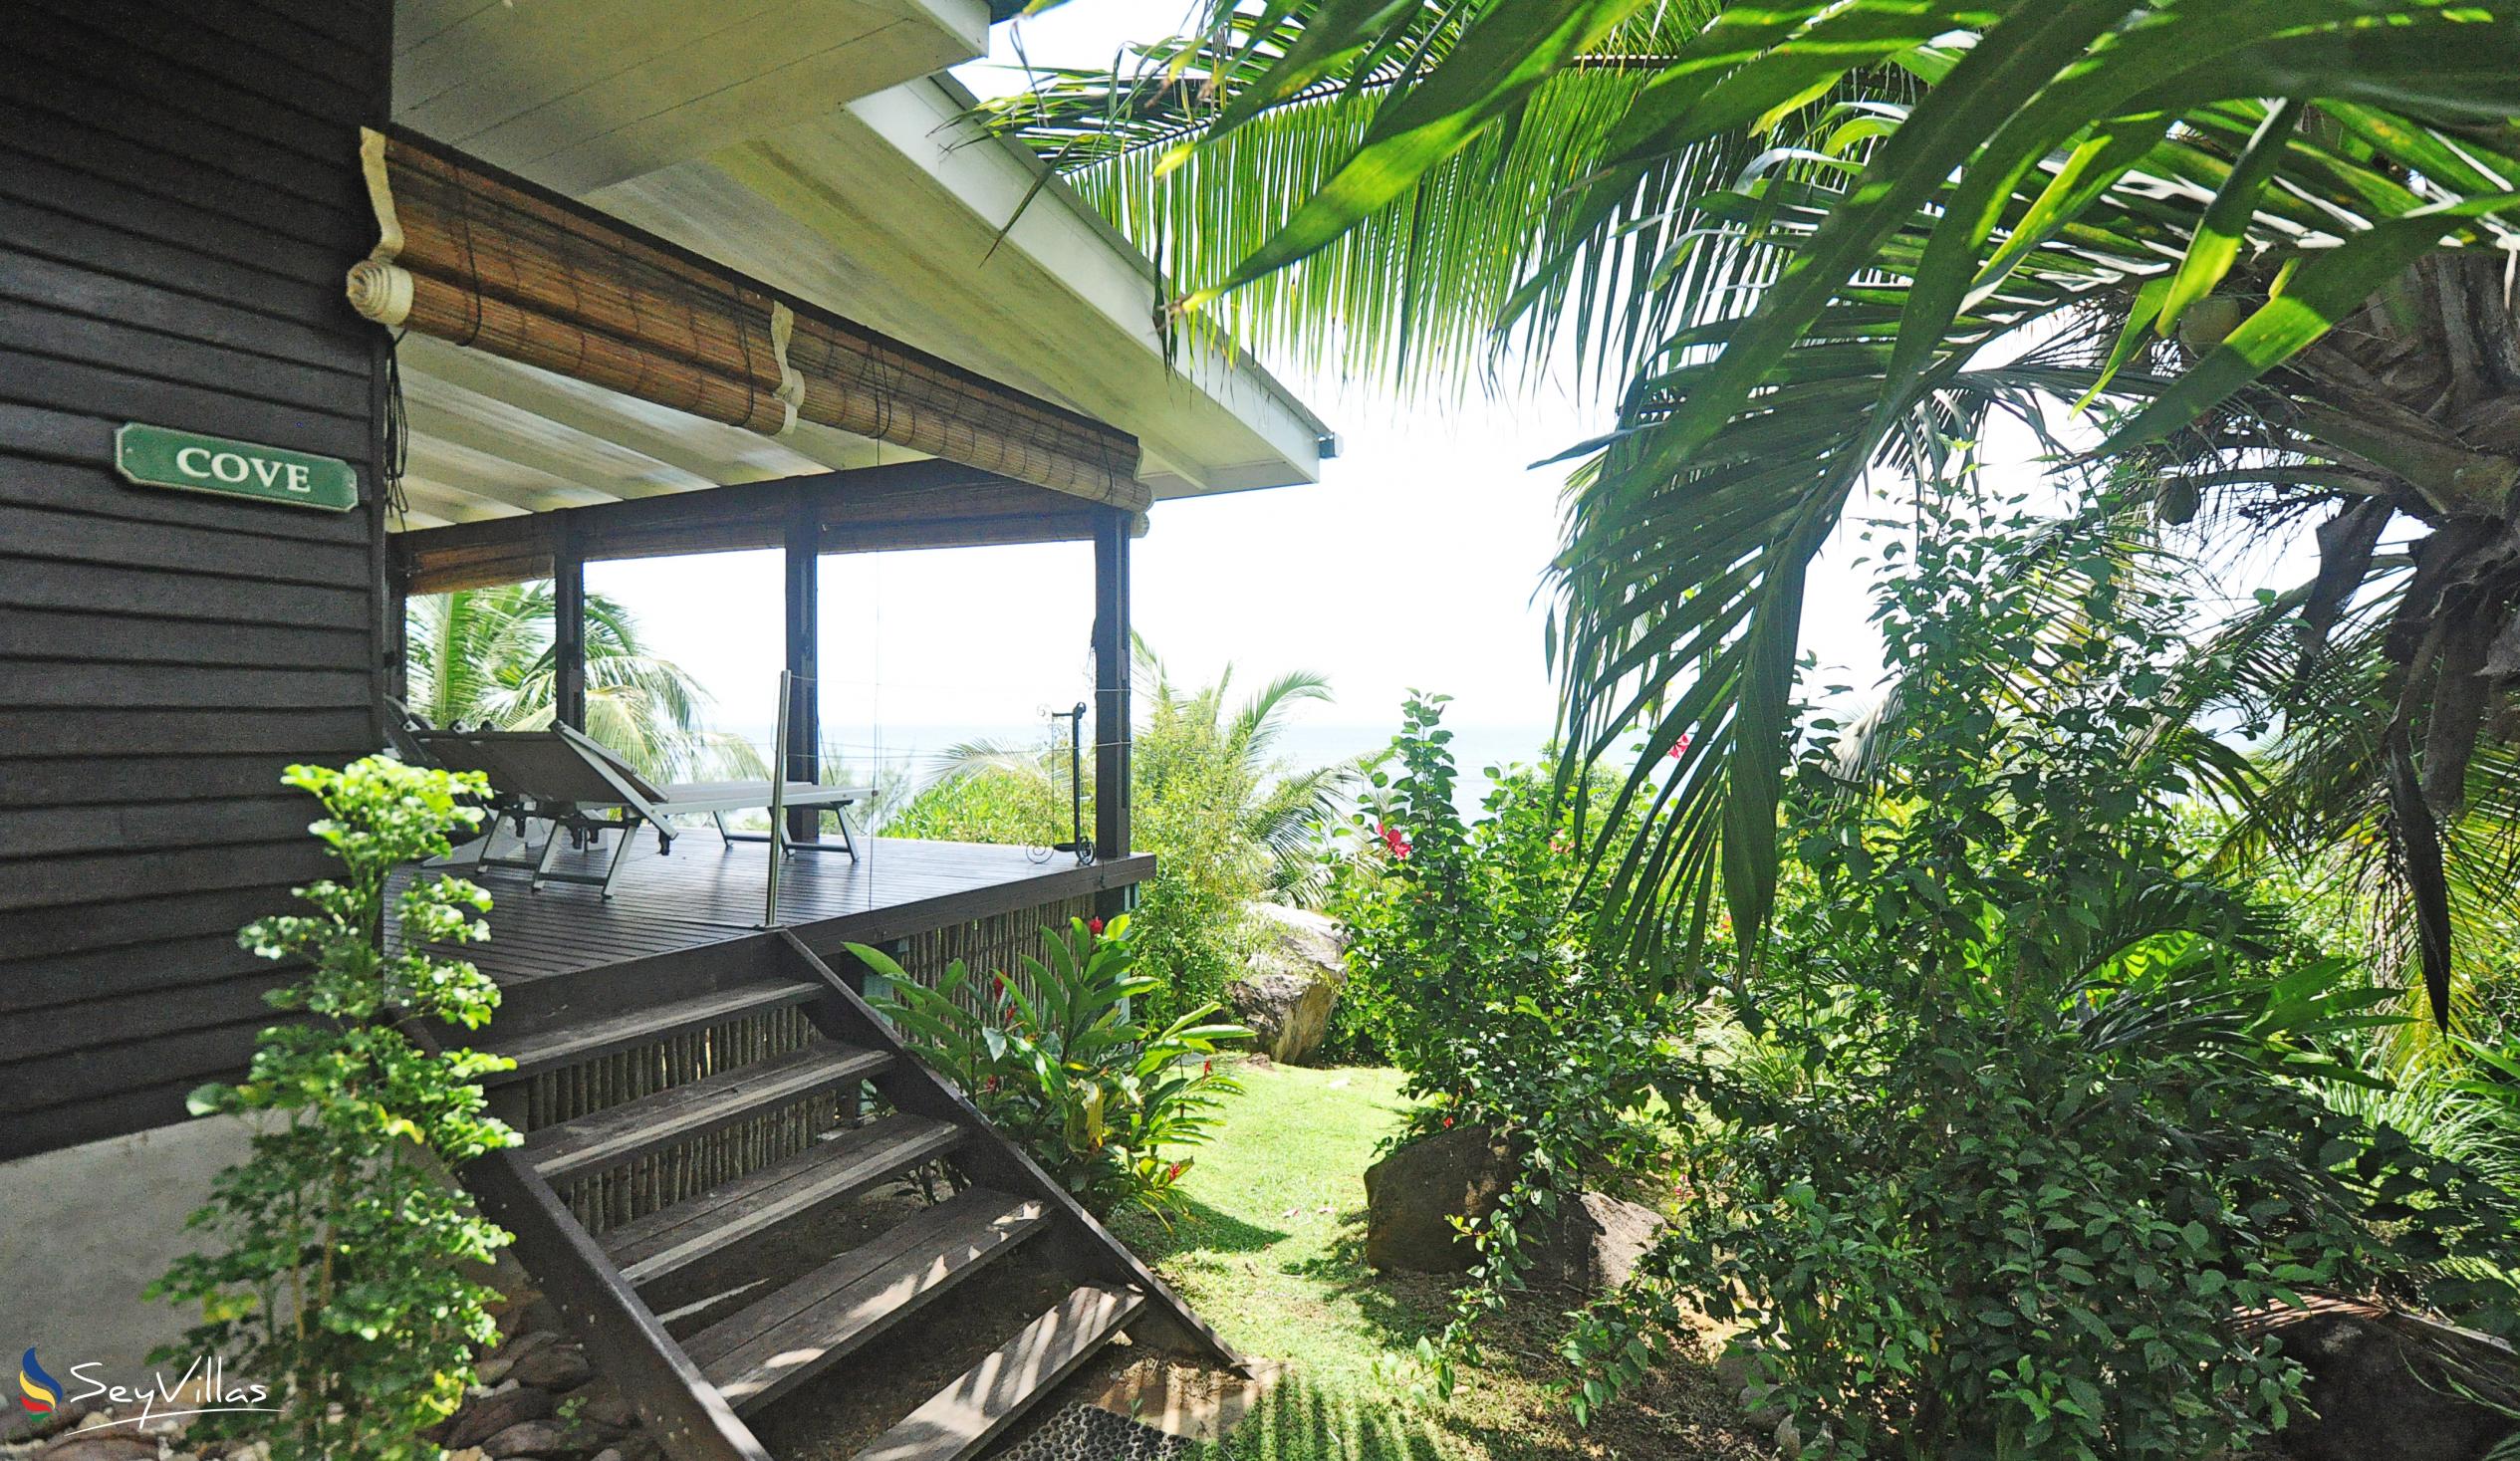 Foto 52: South Point Villas - Villa Cove - Cerf Island (Seychellen)